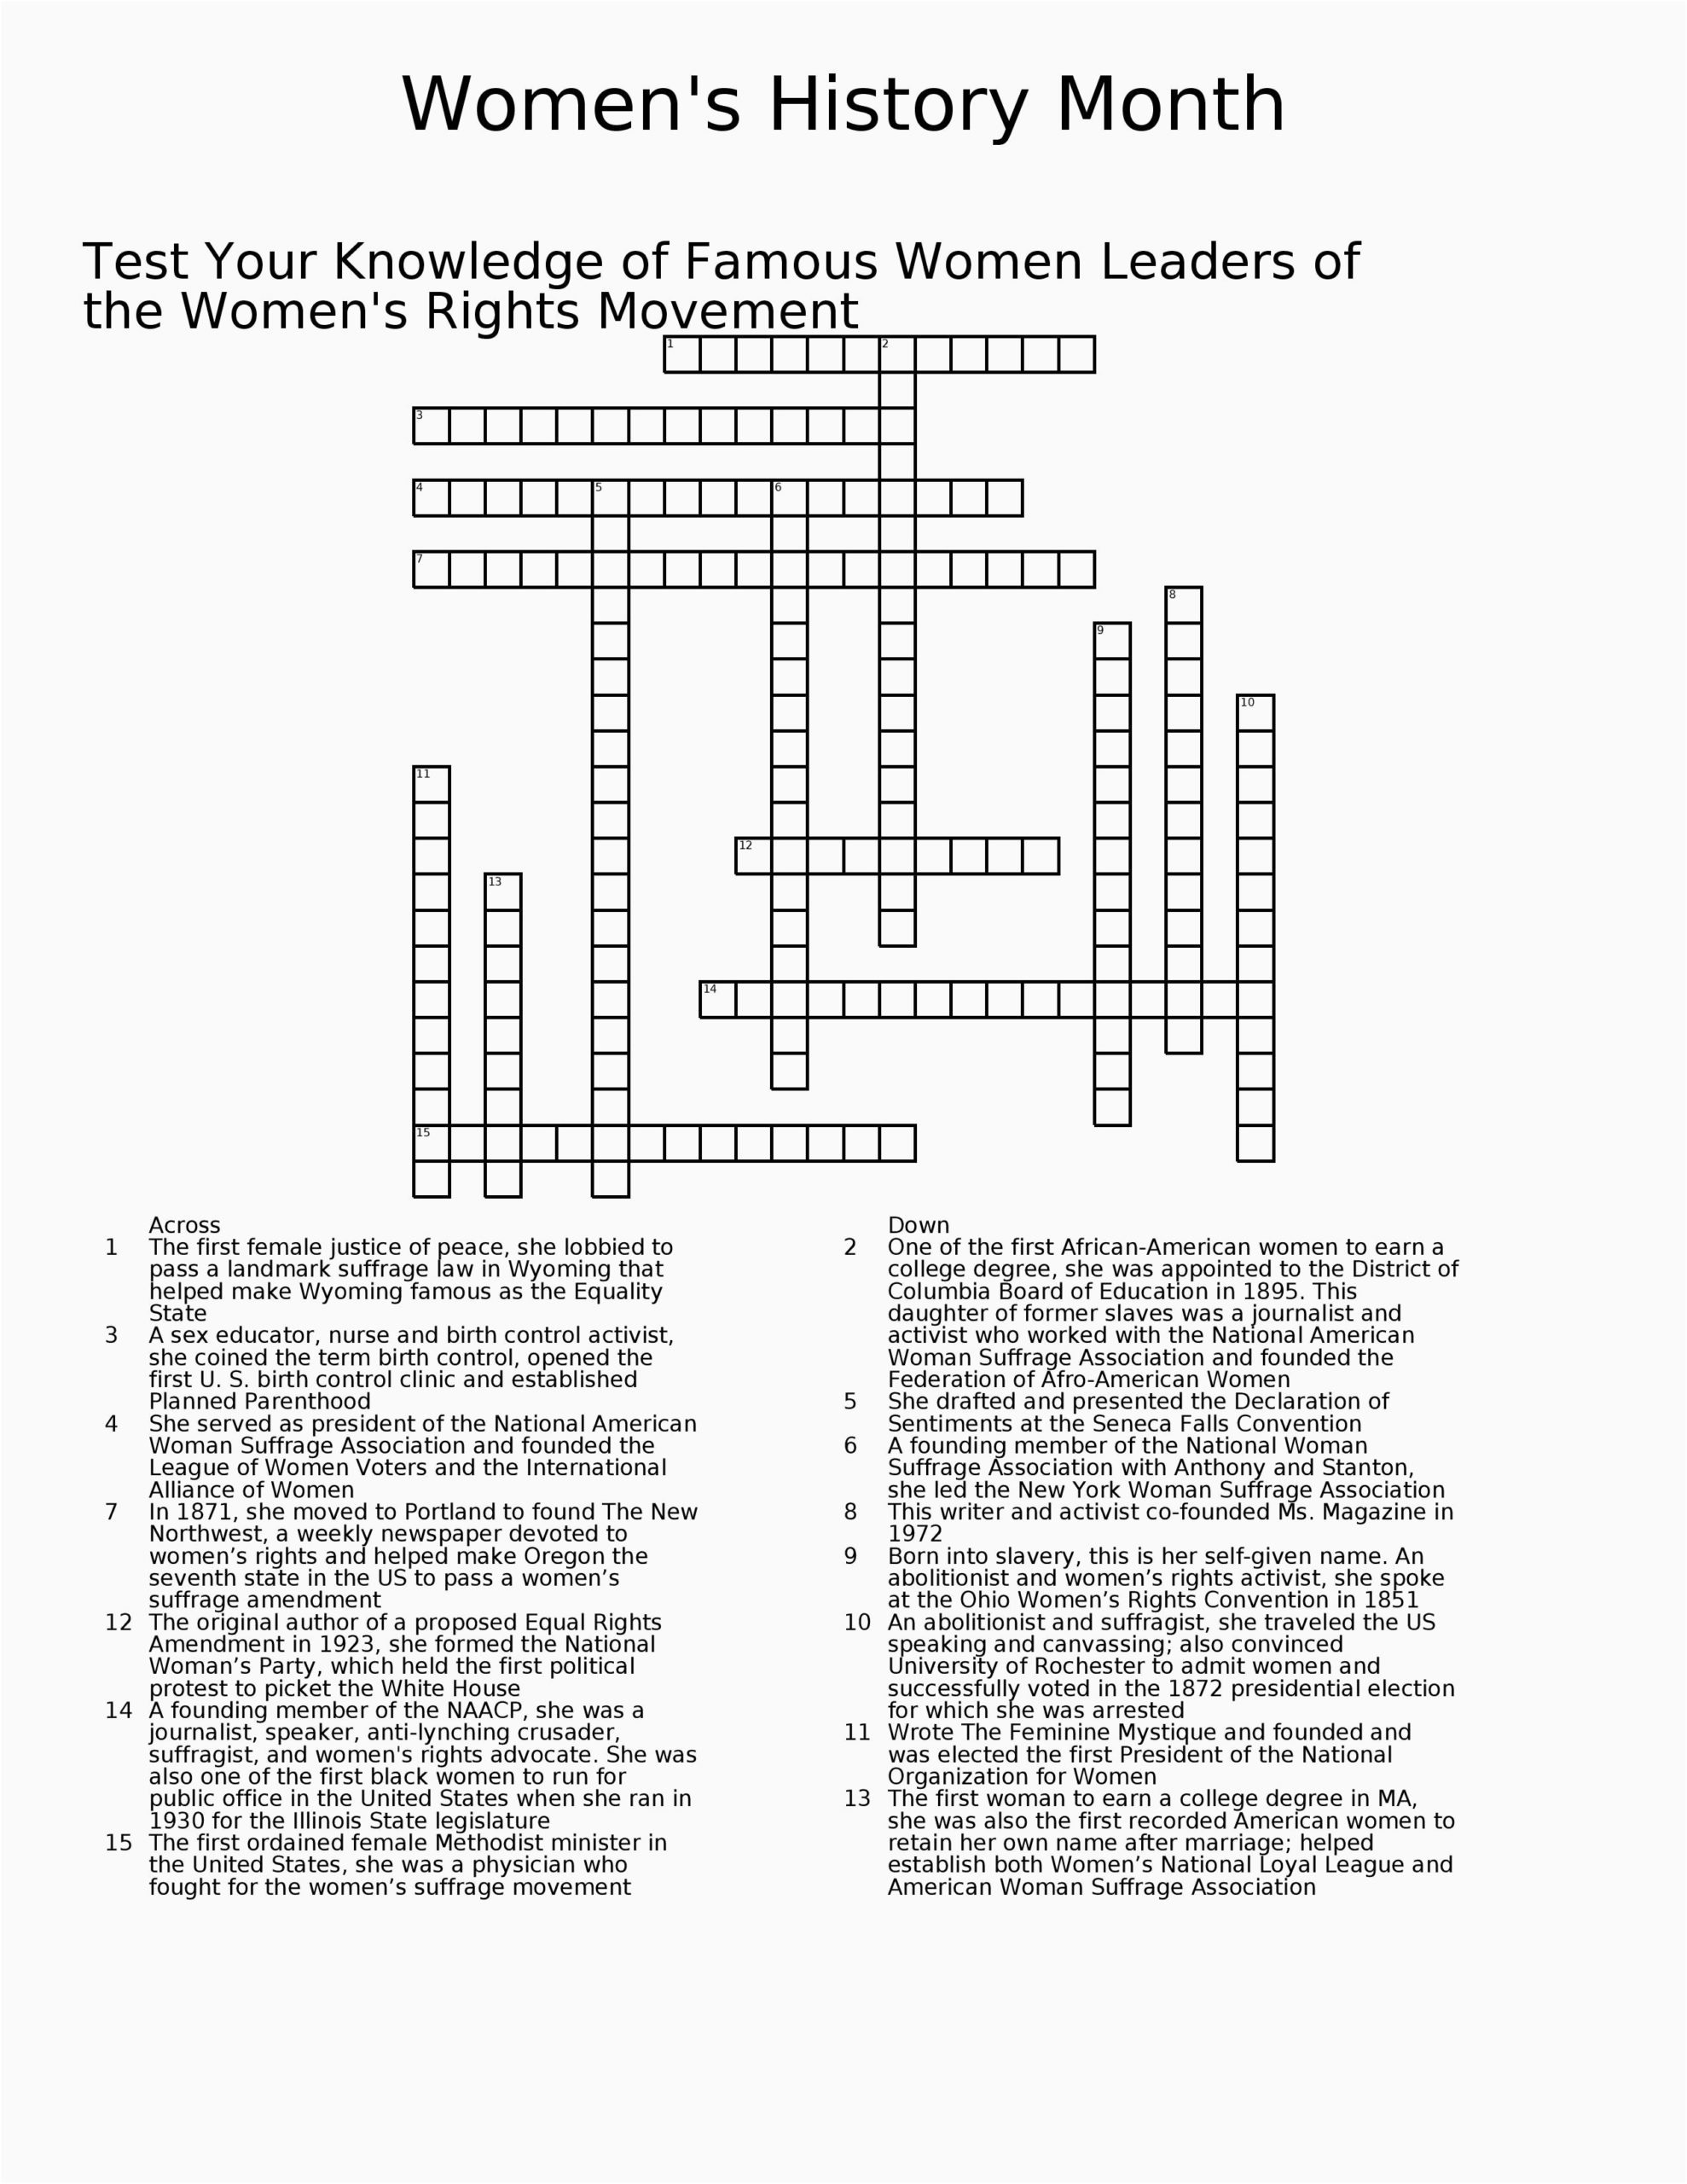 Easy Black History Crossword Puzzle Printable